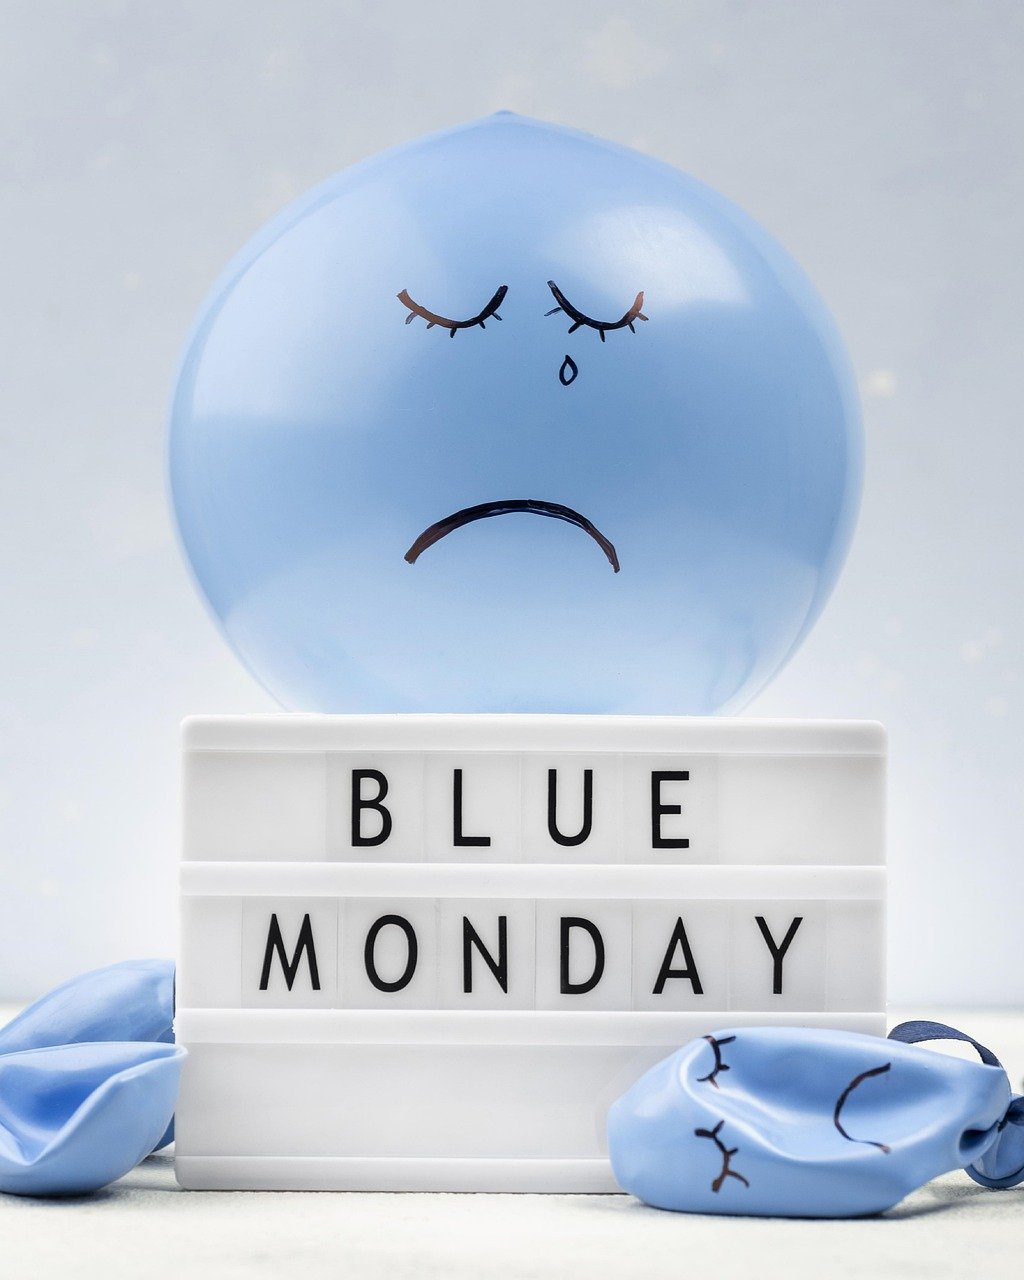 Monday blues 